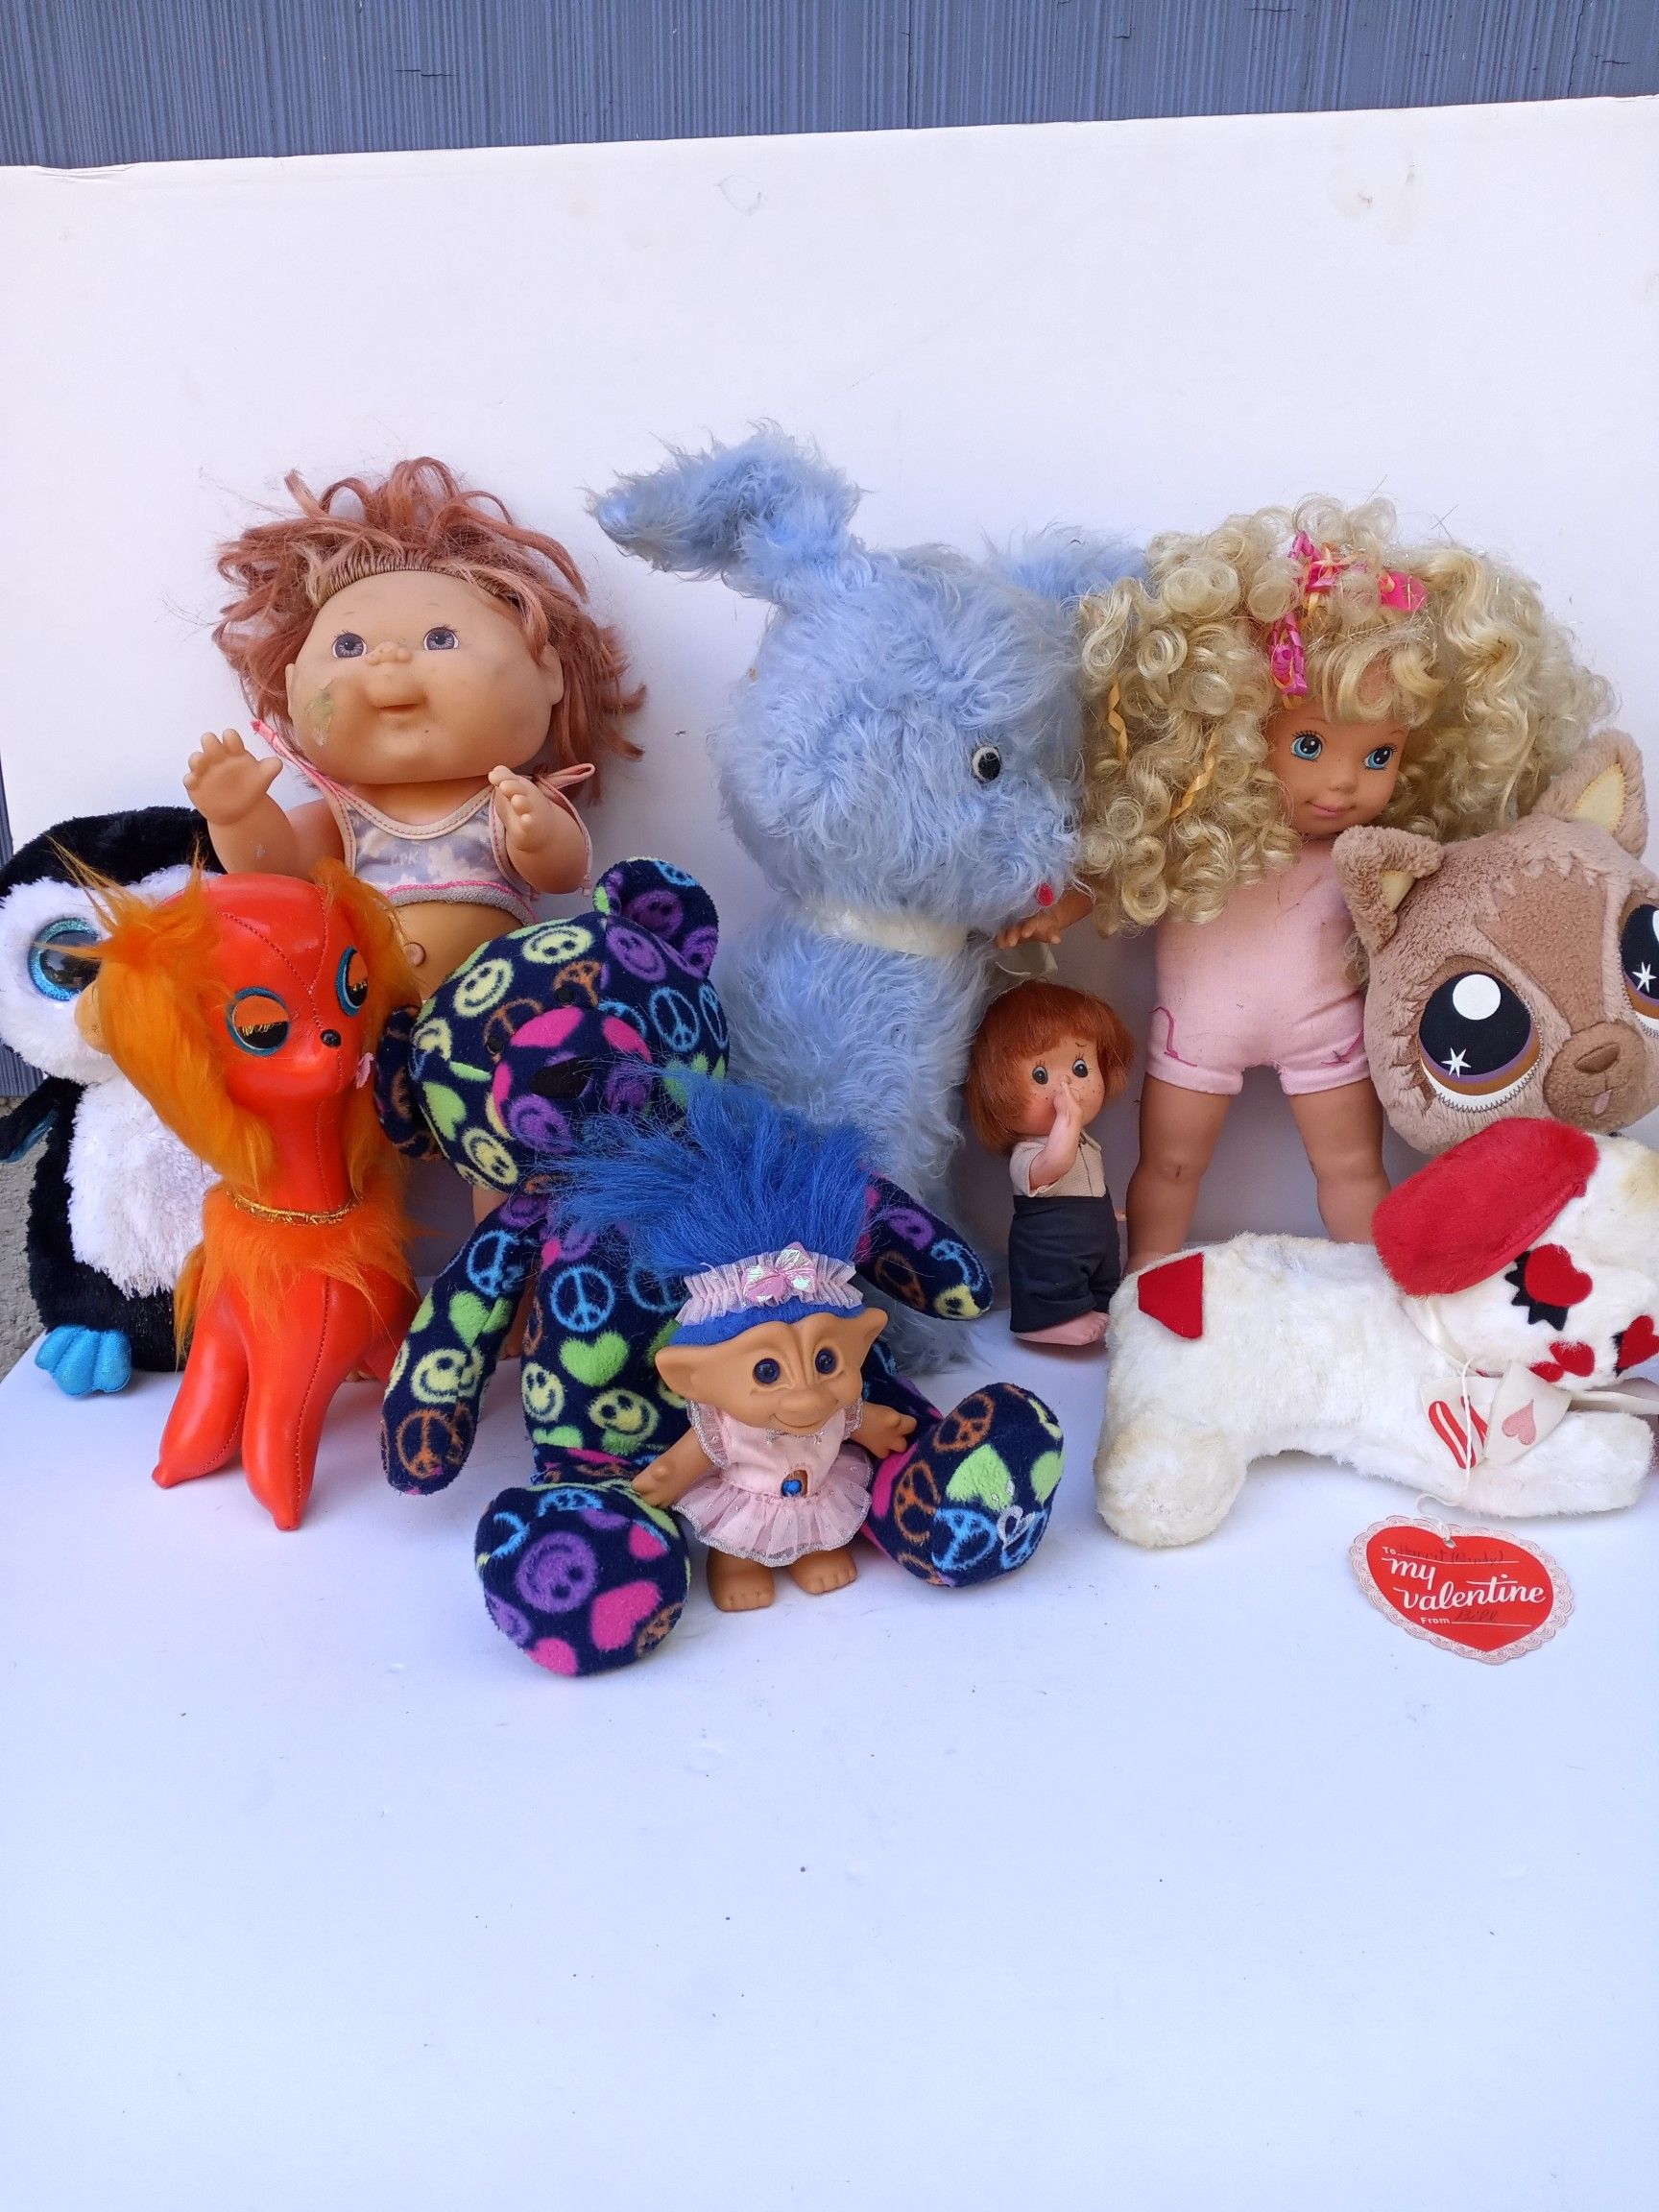 Vintage plush animals and dolls